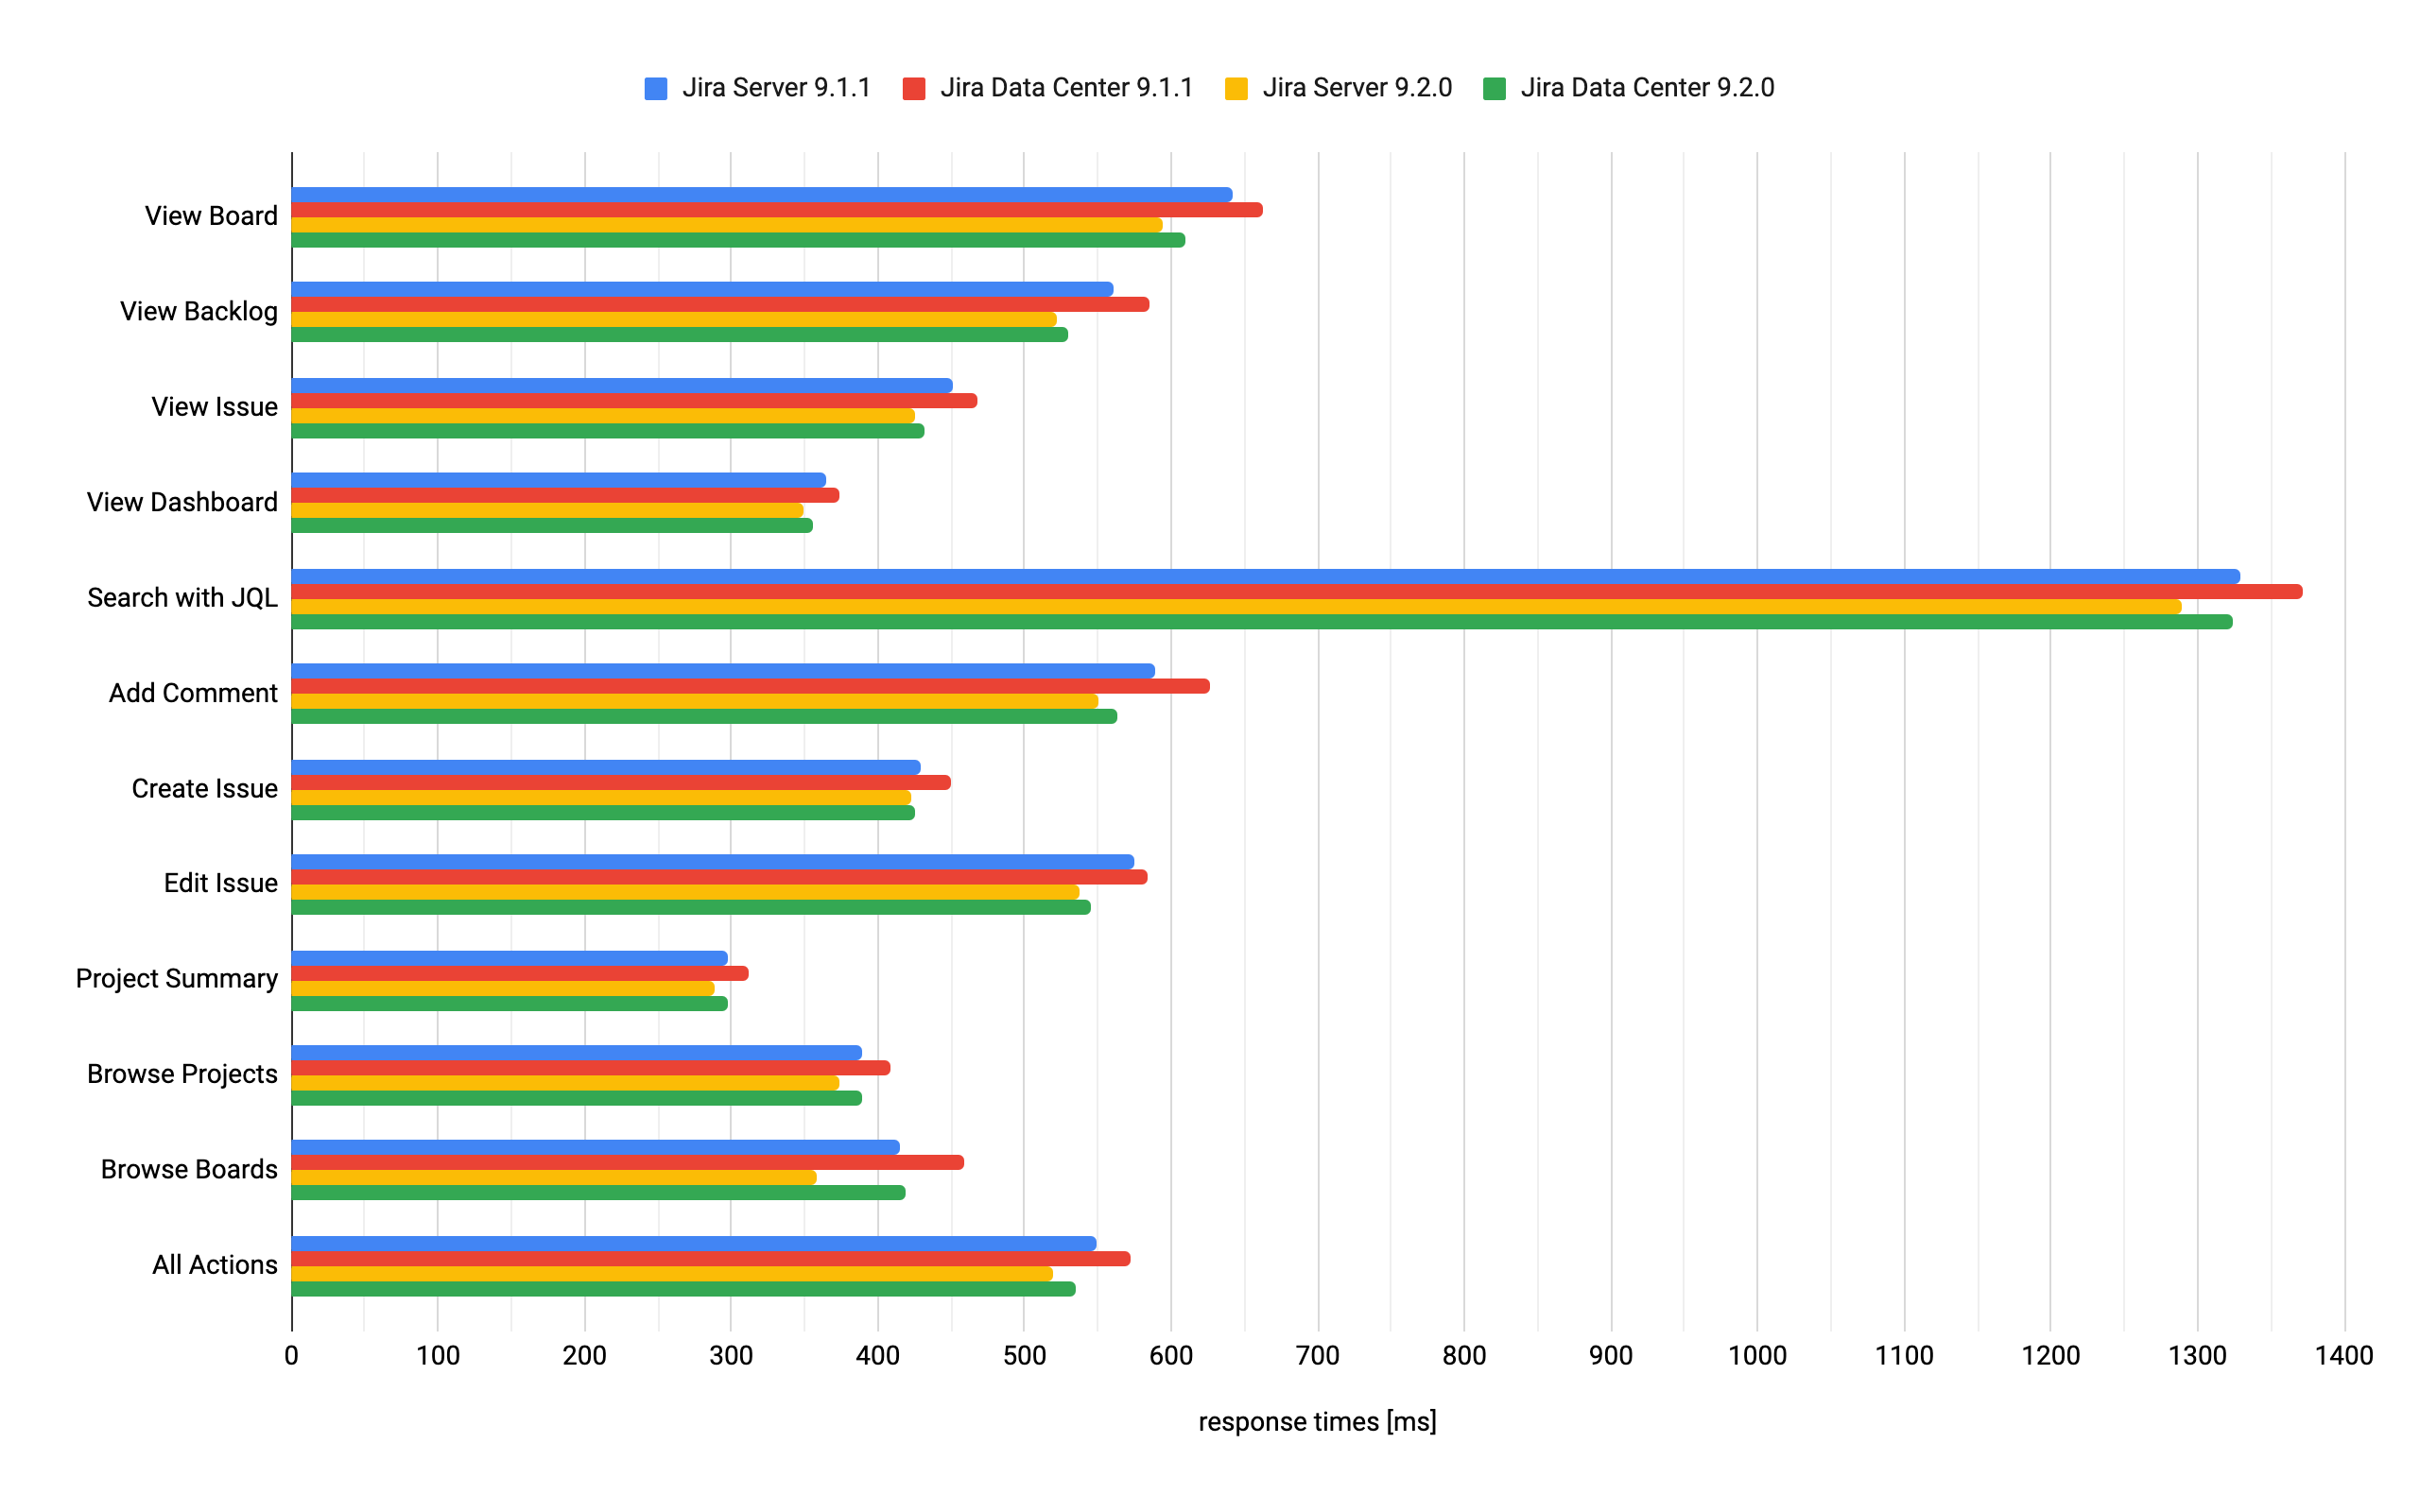 Jira 9.2.0 vs. 9.1.1 performance summary per action (1 million issues)